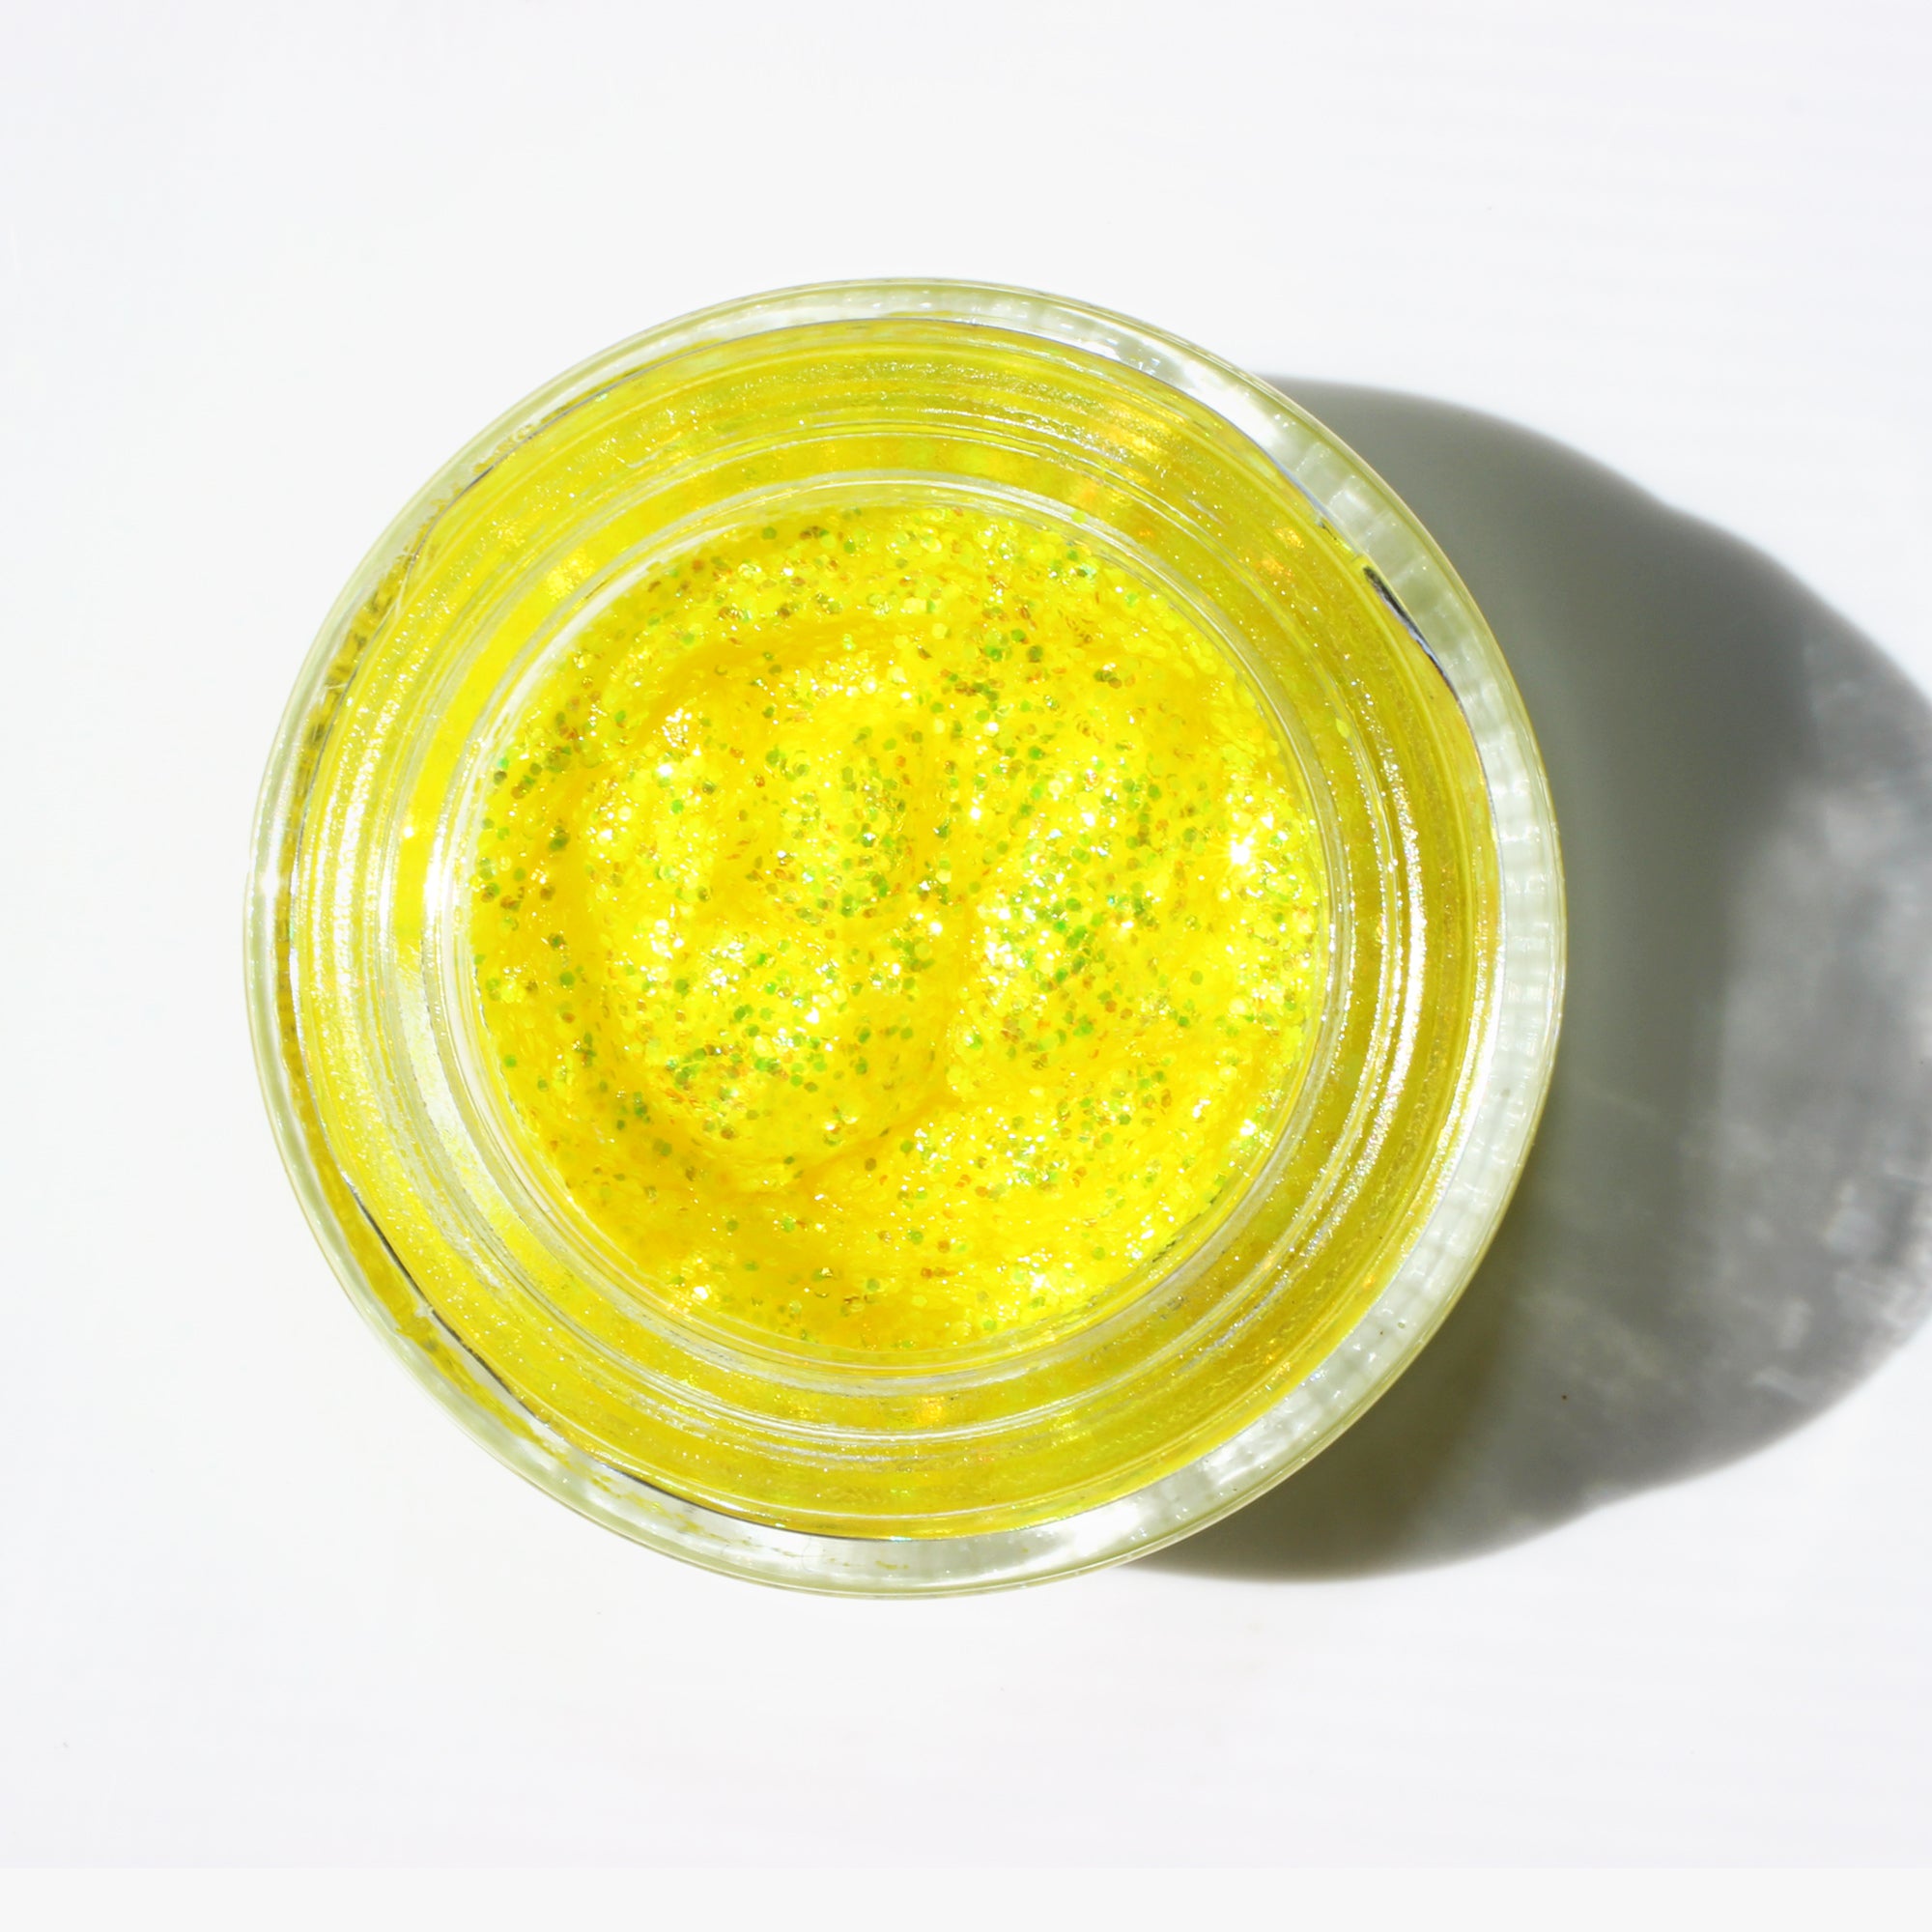 Lemonhead La Glowjam Cosmic UV Glitter Balm, Hollyweird